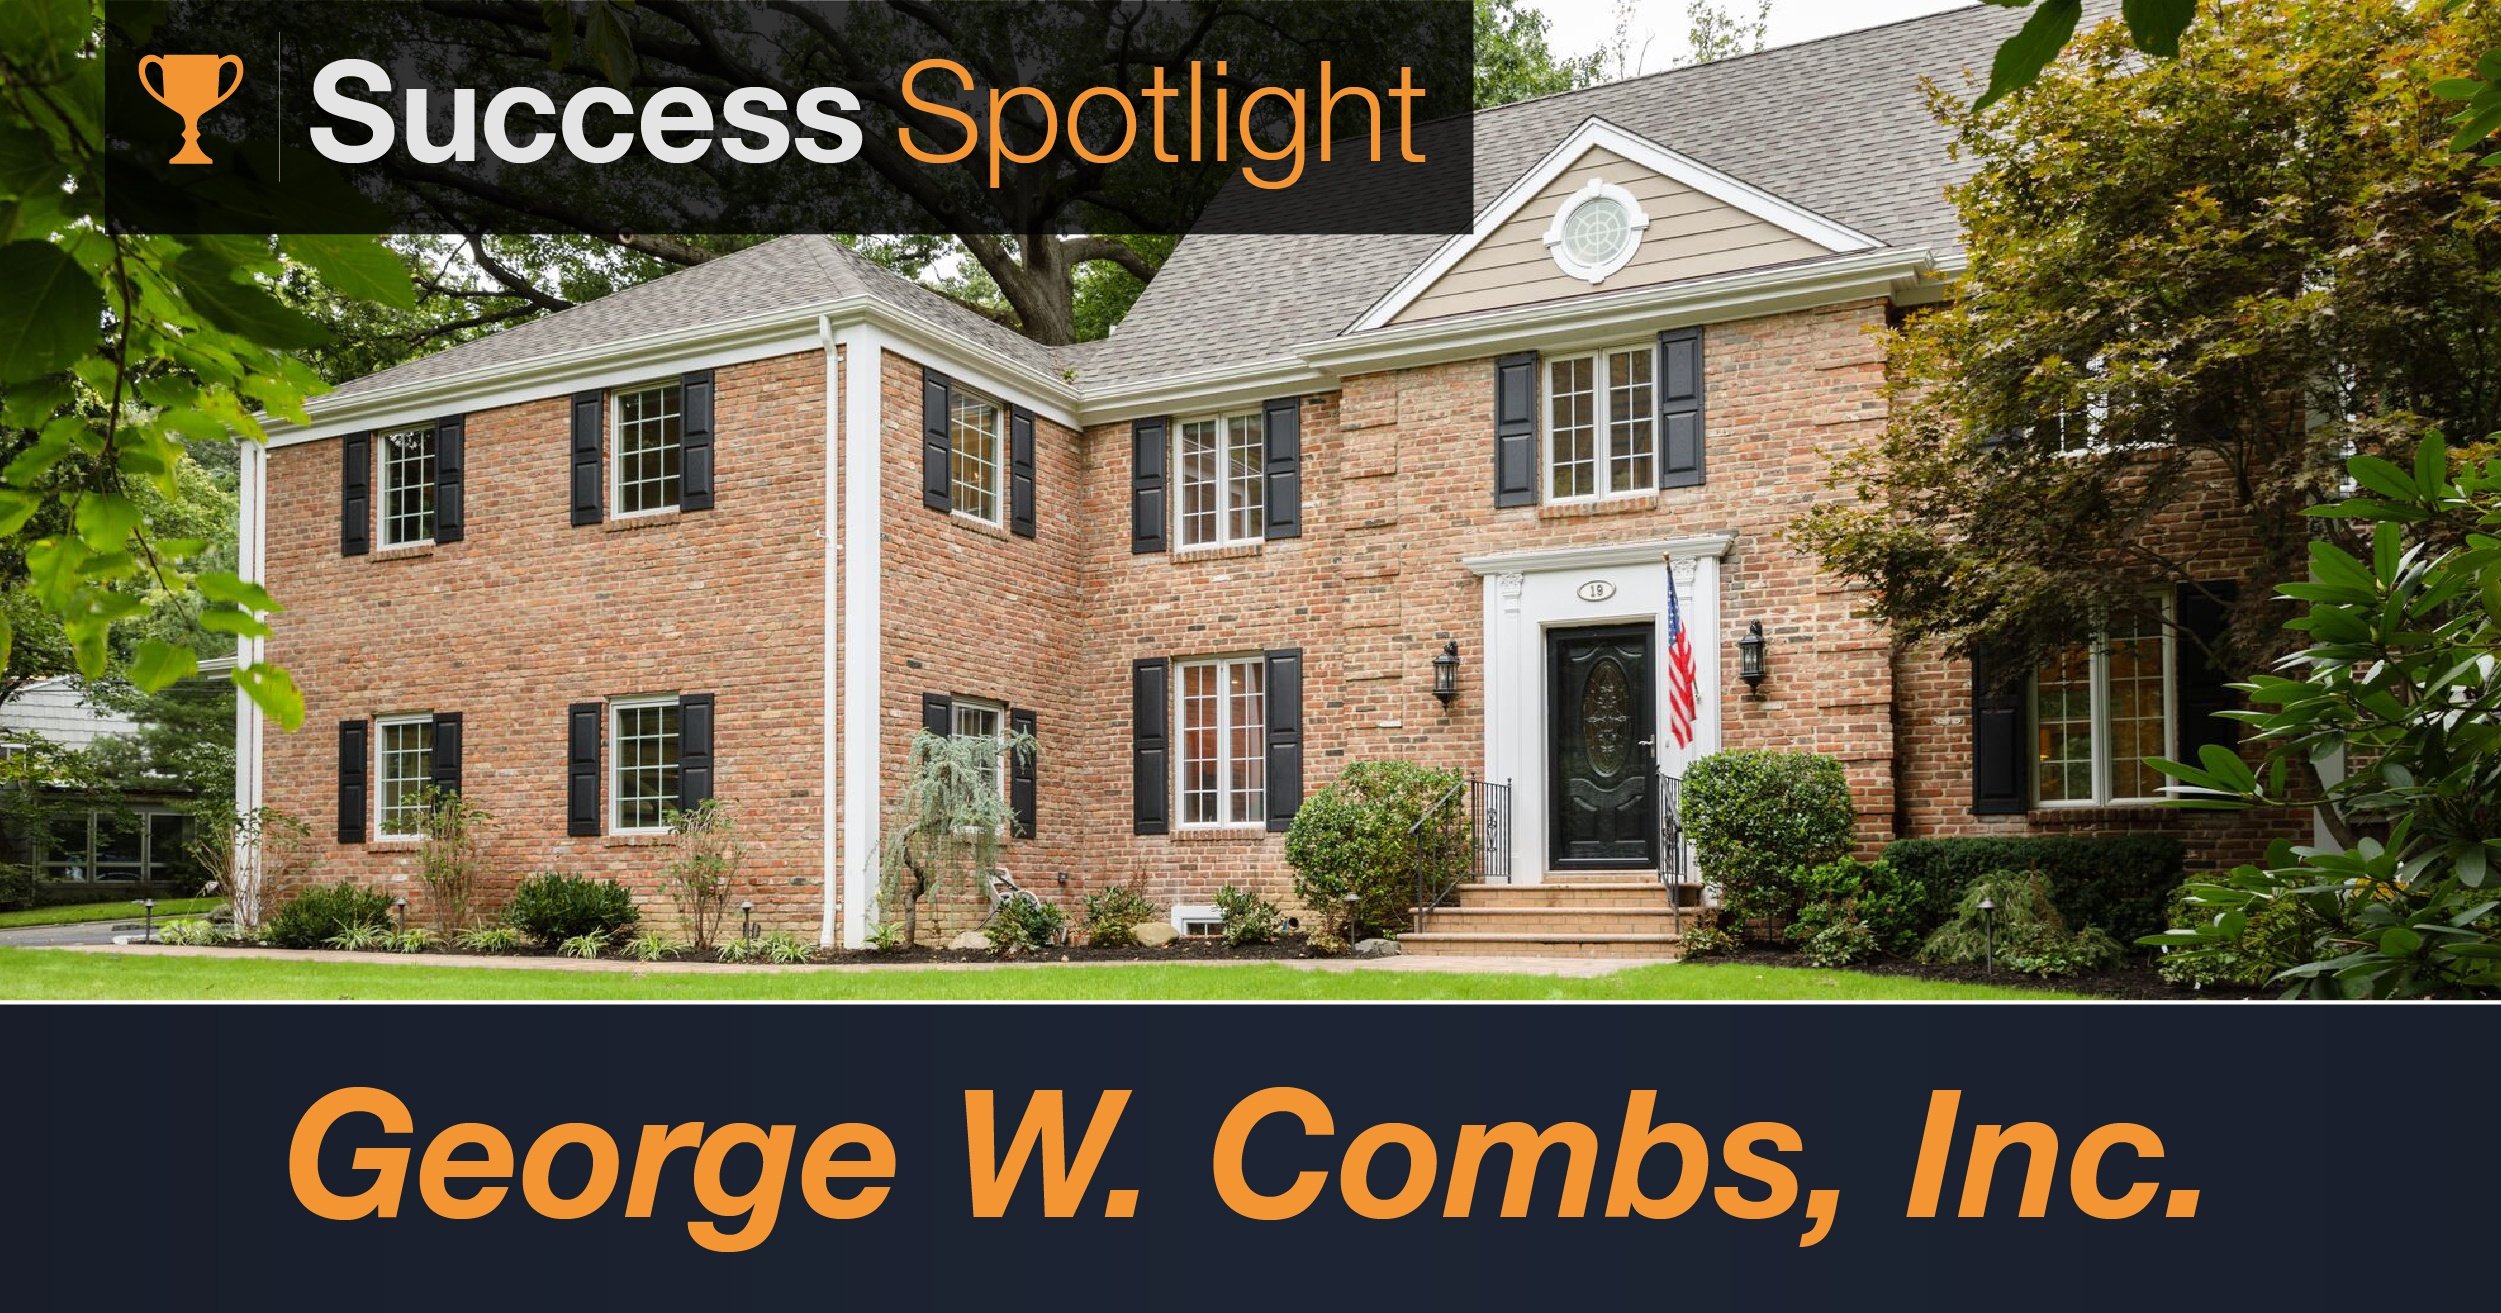 Success Spotlight: George W. Combs, Inc.